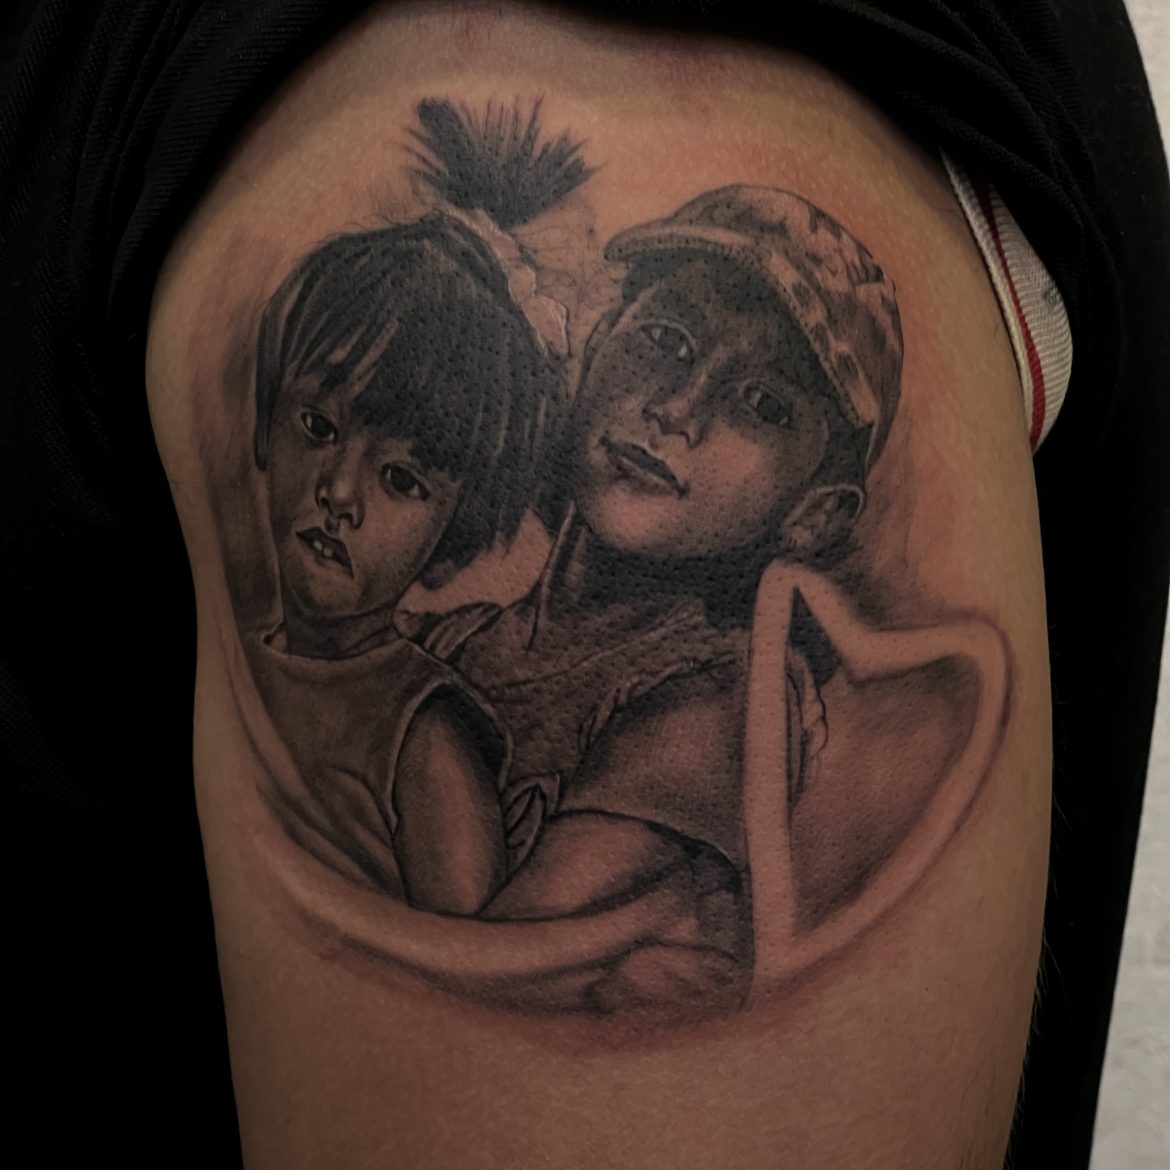 Tattoo Ideas 2019 - Symbolic Tattoos & Top Tattoo Parlours In India | POPxo